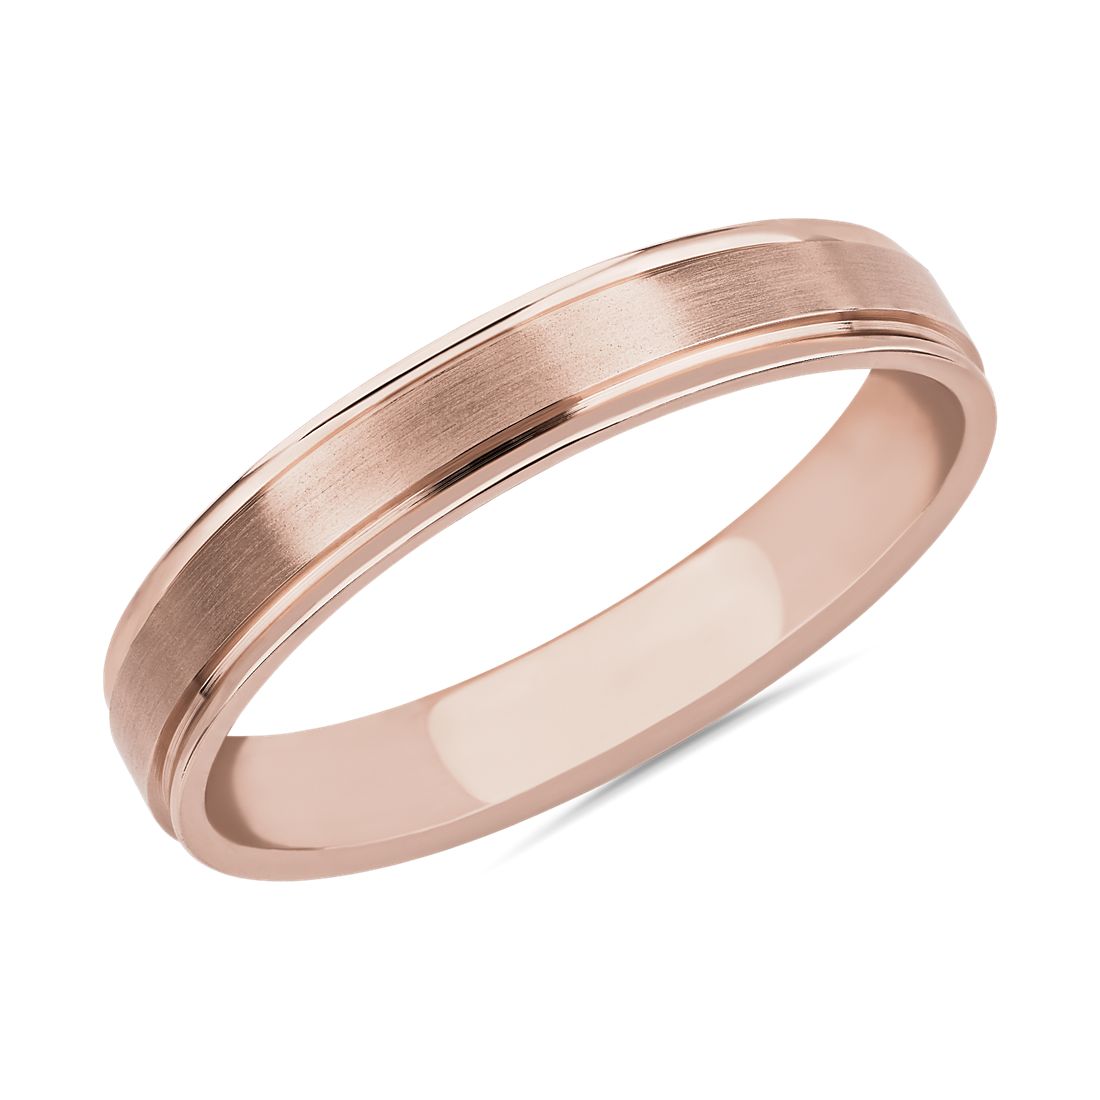 Brushed Inlay Wedding Ring in 14k Rose Gold (4 mm)